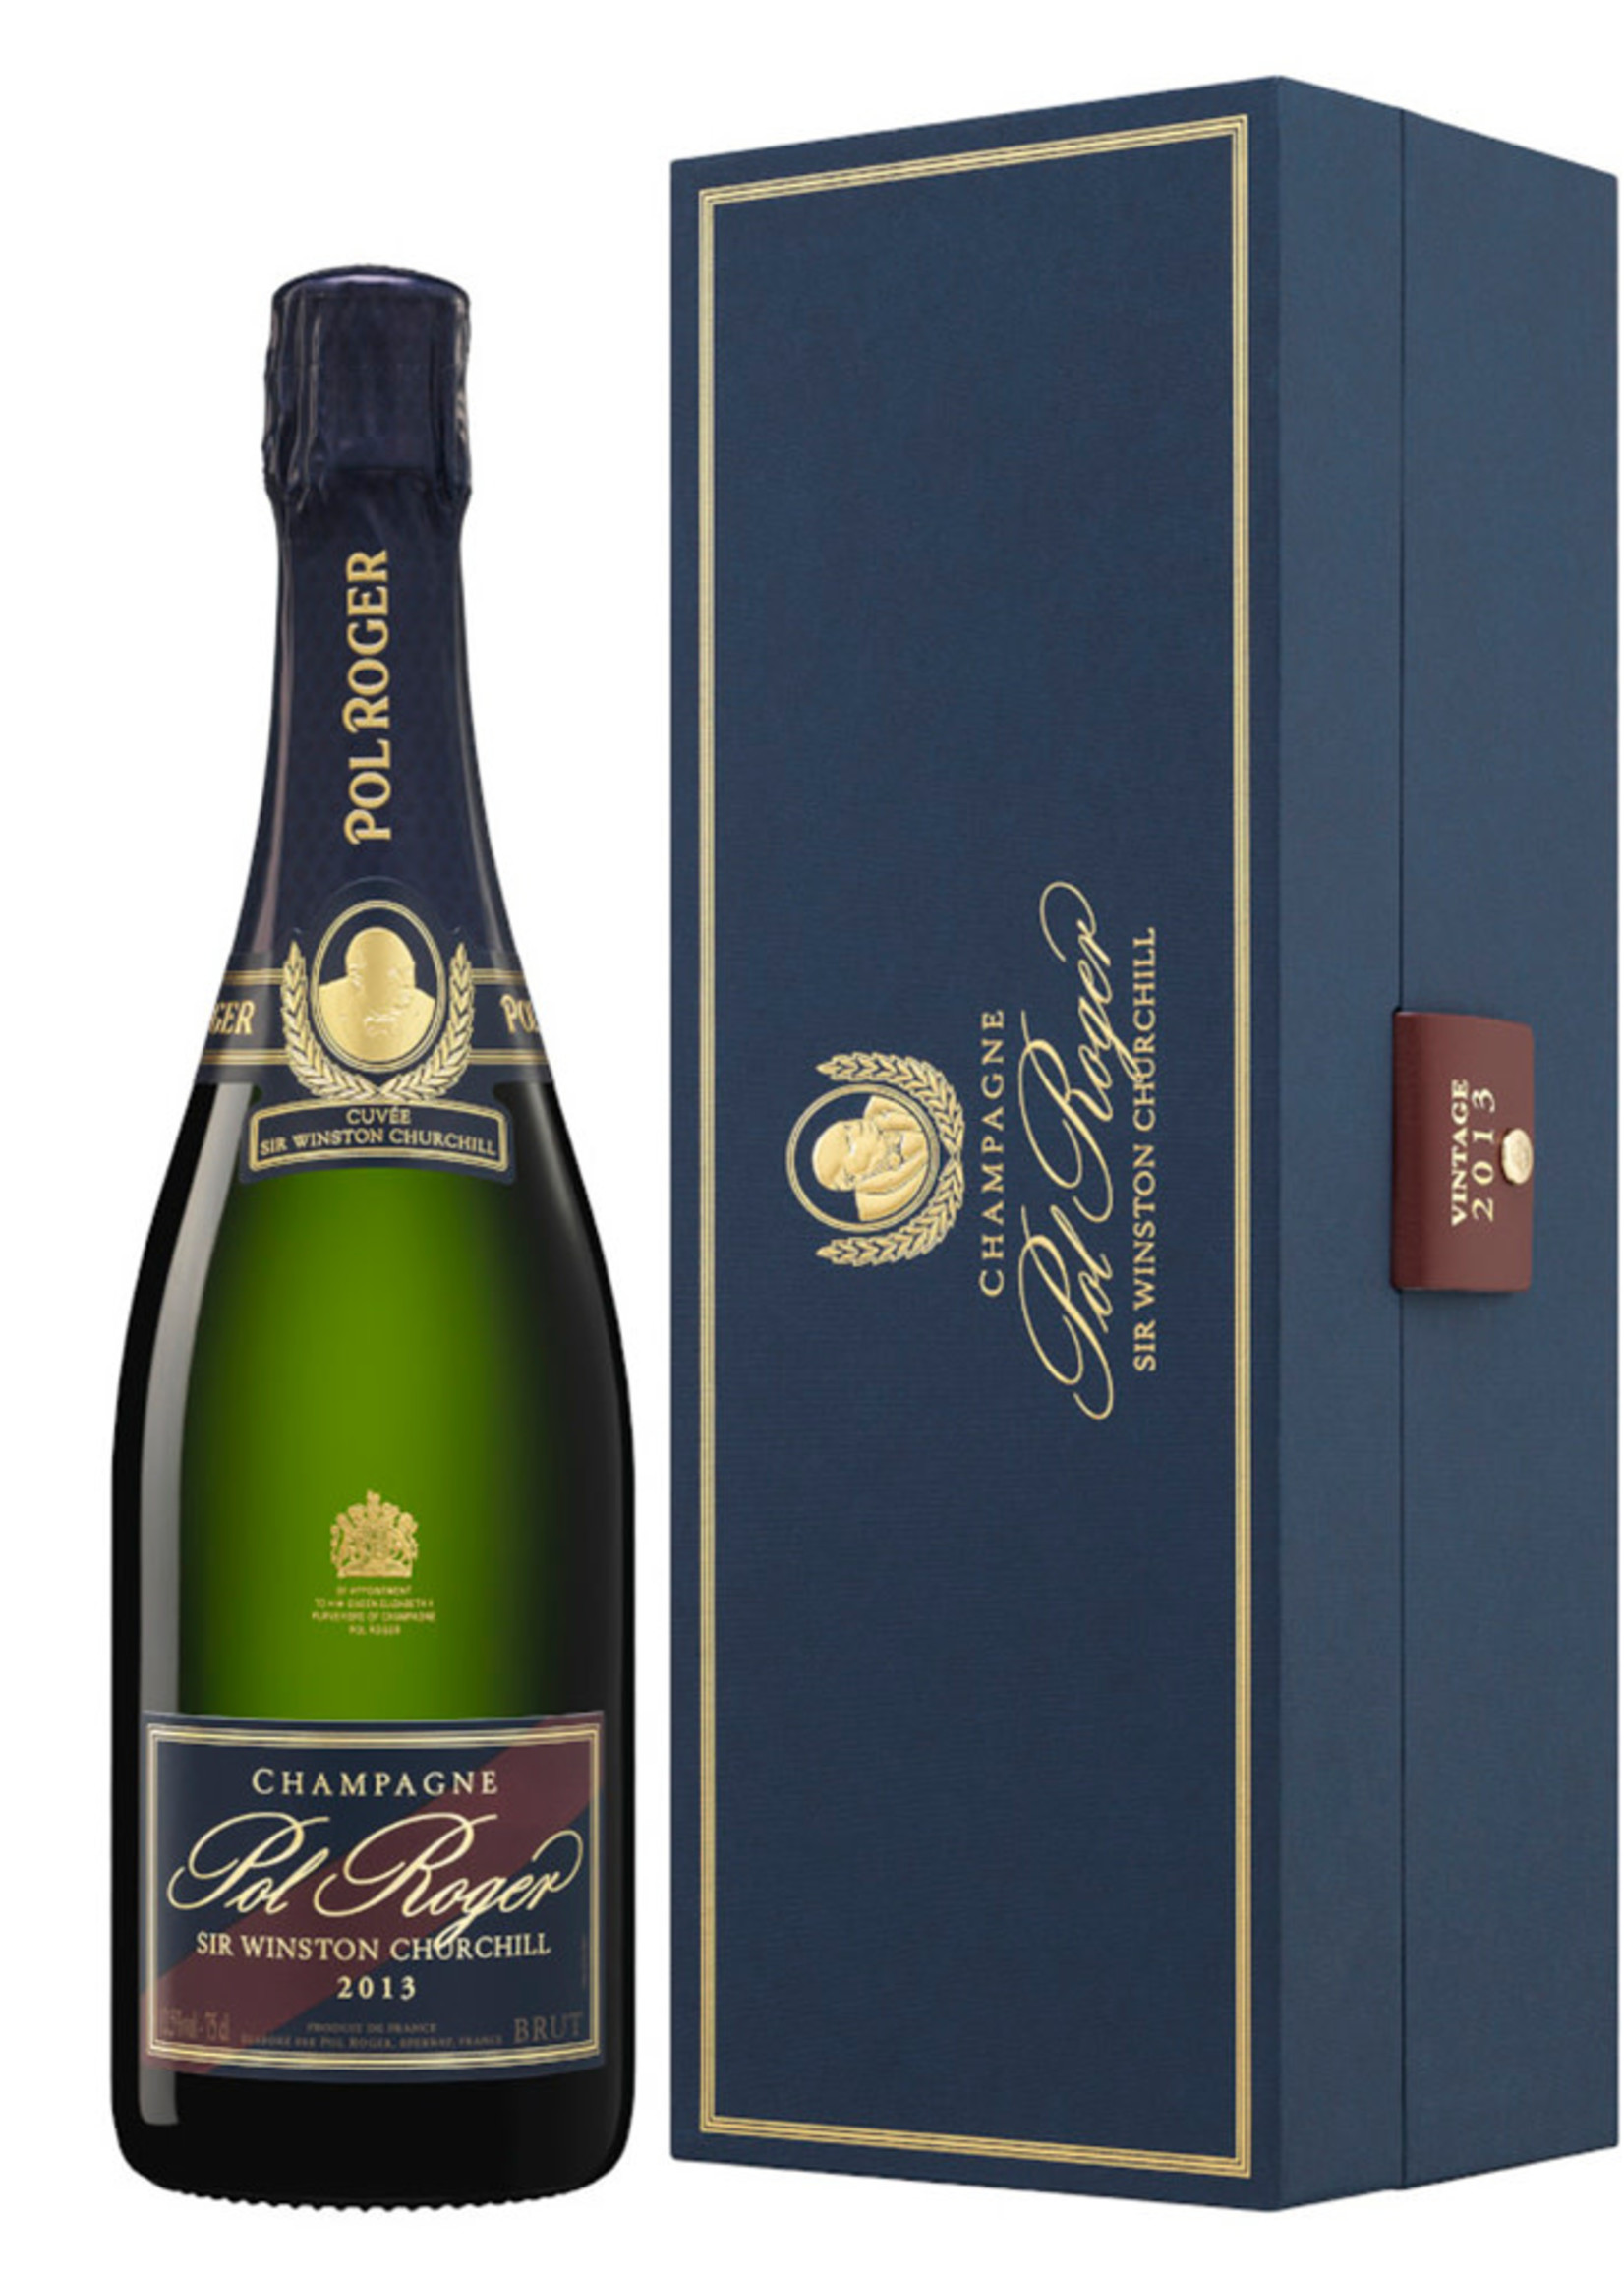 Pol Roger "Sir Winston Churchill" Champagne Brut Vintage 2013 750ML